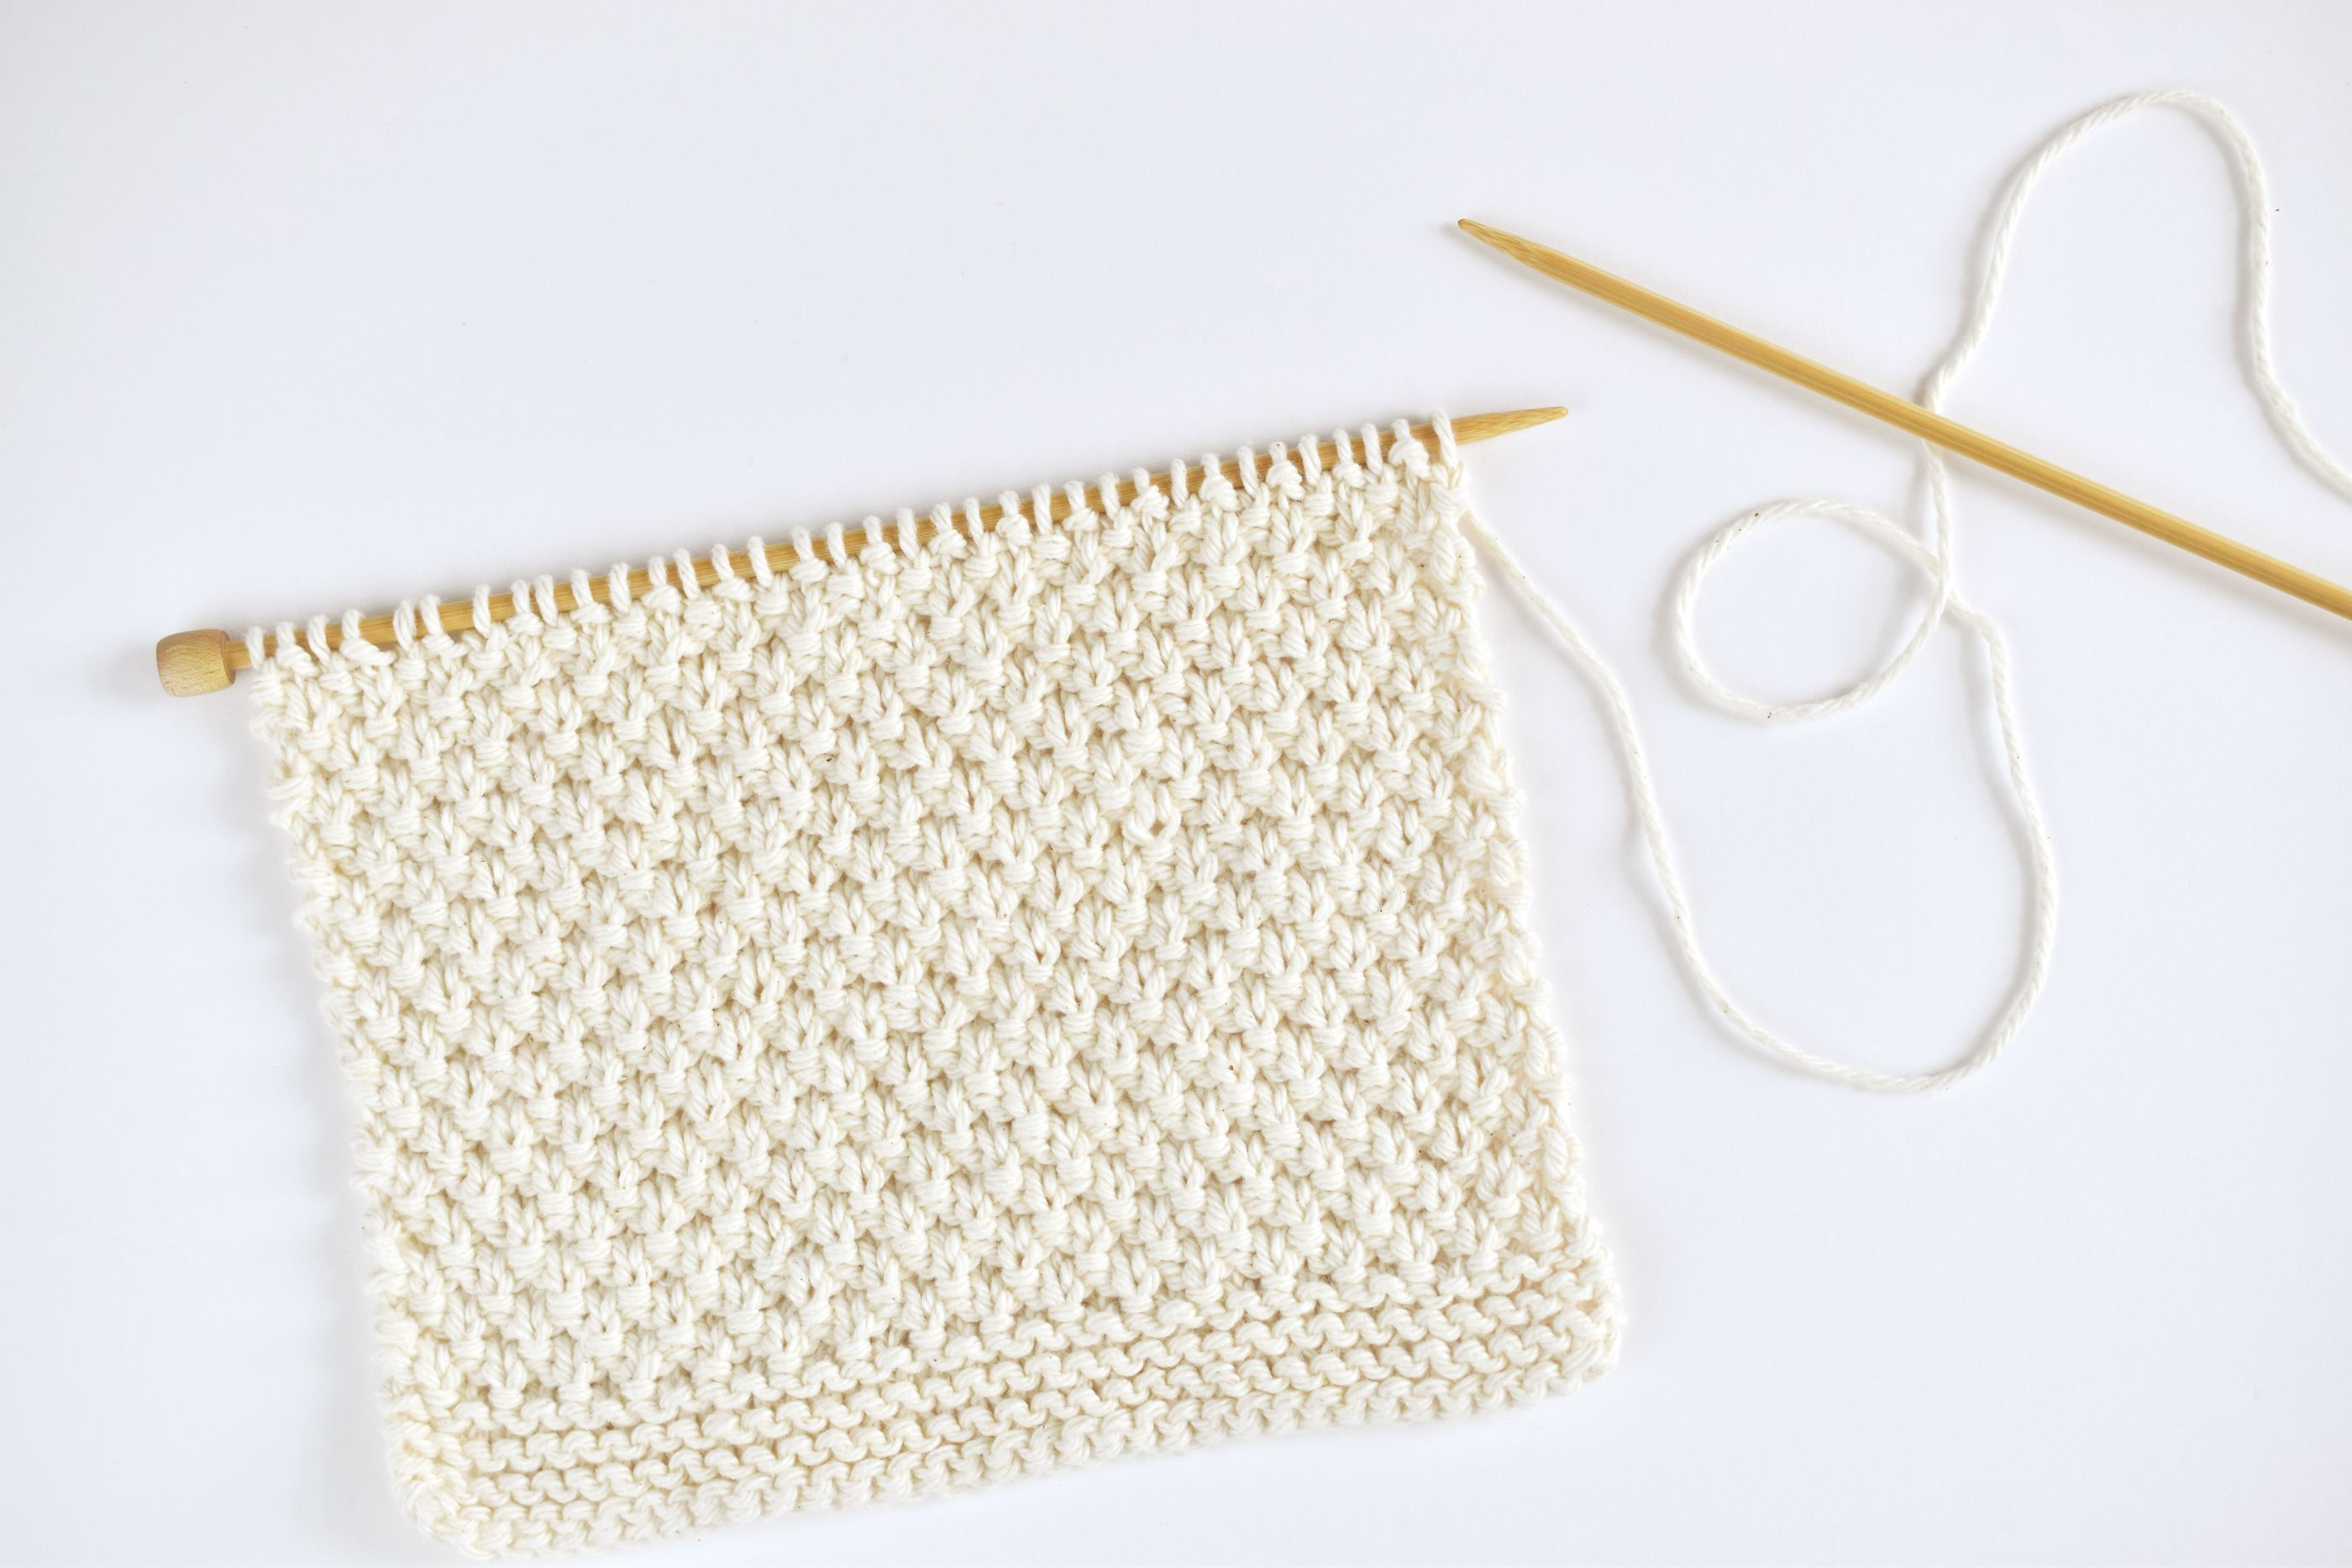 Knit Dishcloth Patterns For Beginners Free Moss Stitch Dishcloth Knitting Pattern